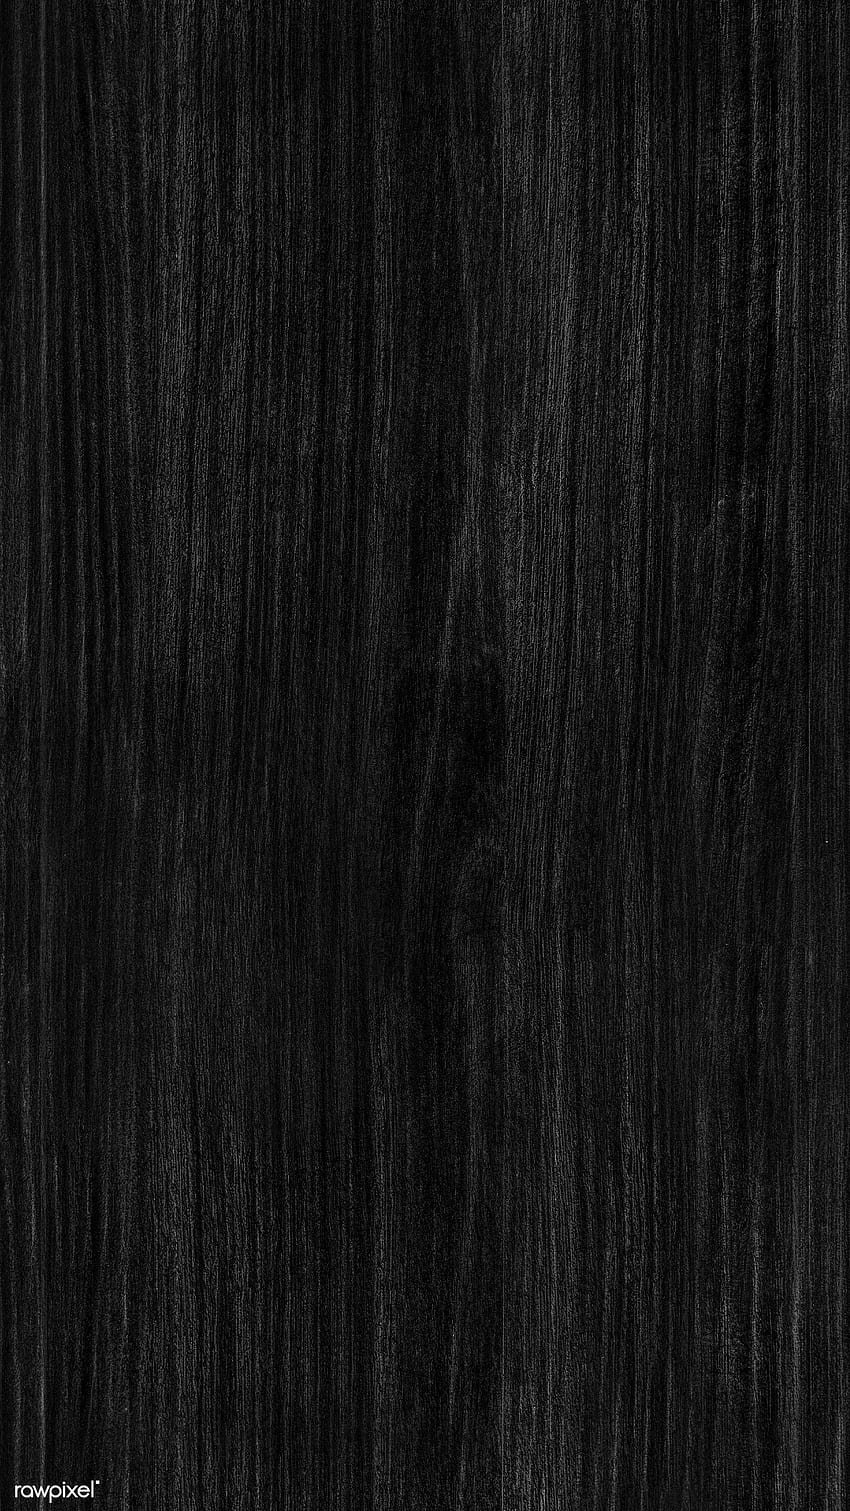 Latar belakang ponsel bertekstur kayu hitam kosong. oleh / laut. Latar belakang tekstur hitam, Tekstur kayu hitam, Latar belakang kayu hitam, Semen Hitam wallpaper ponsel HD